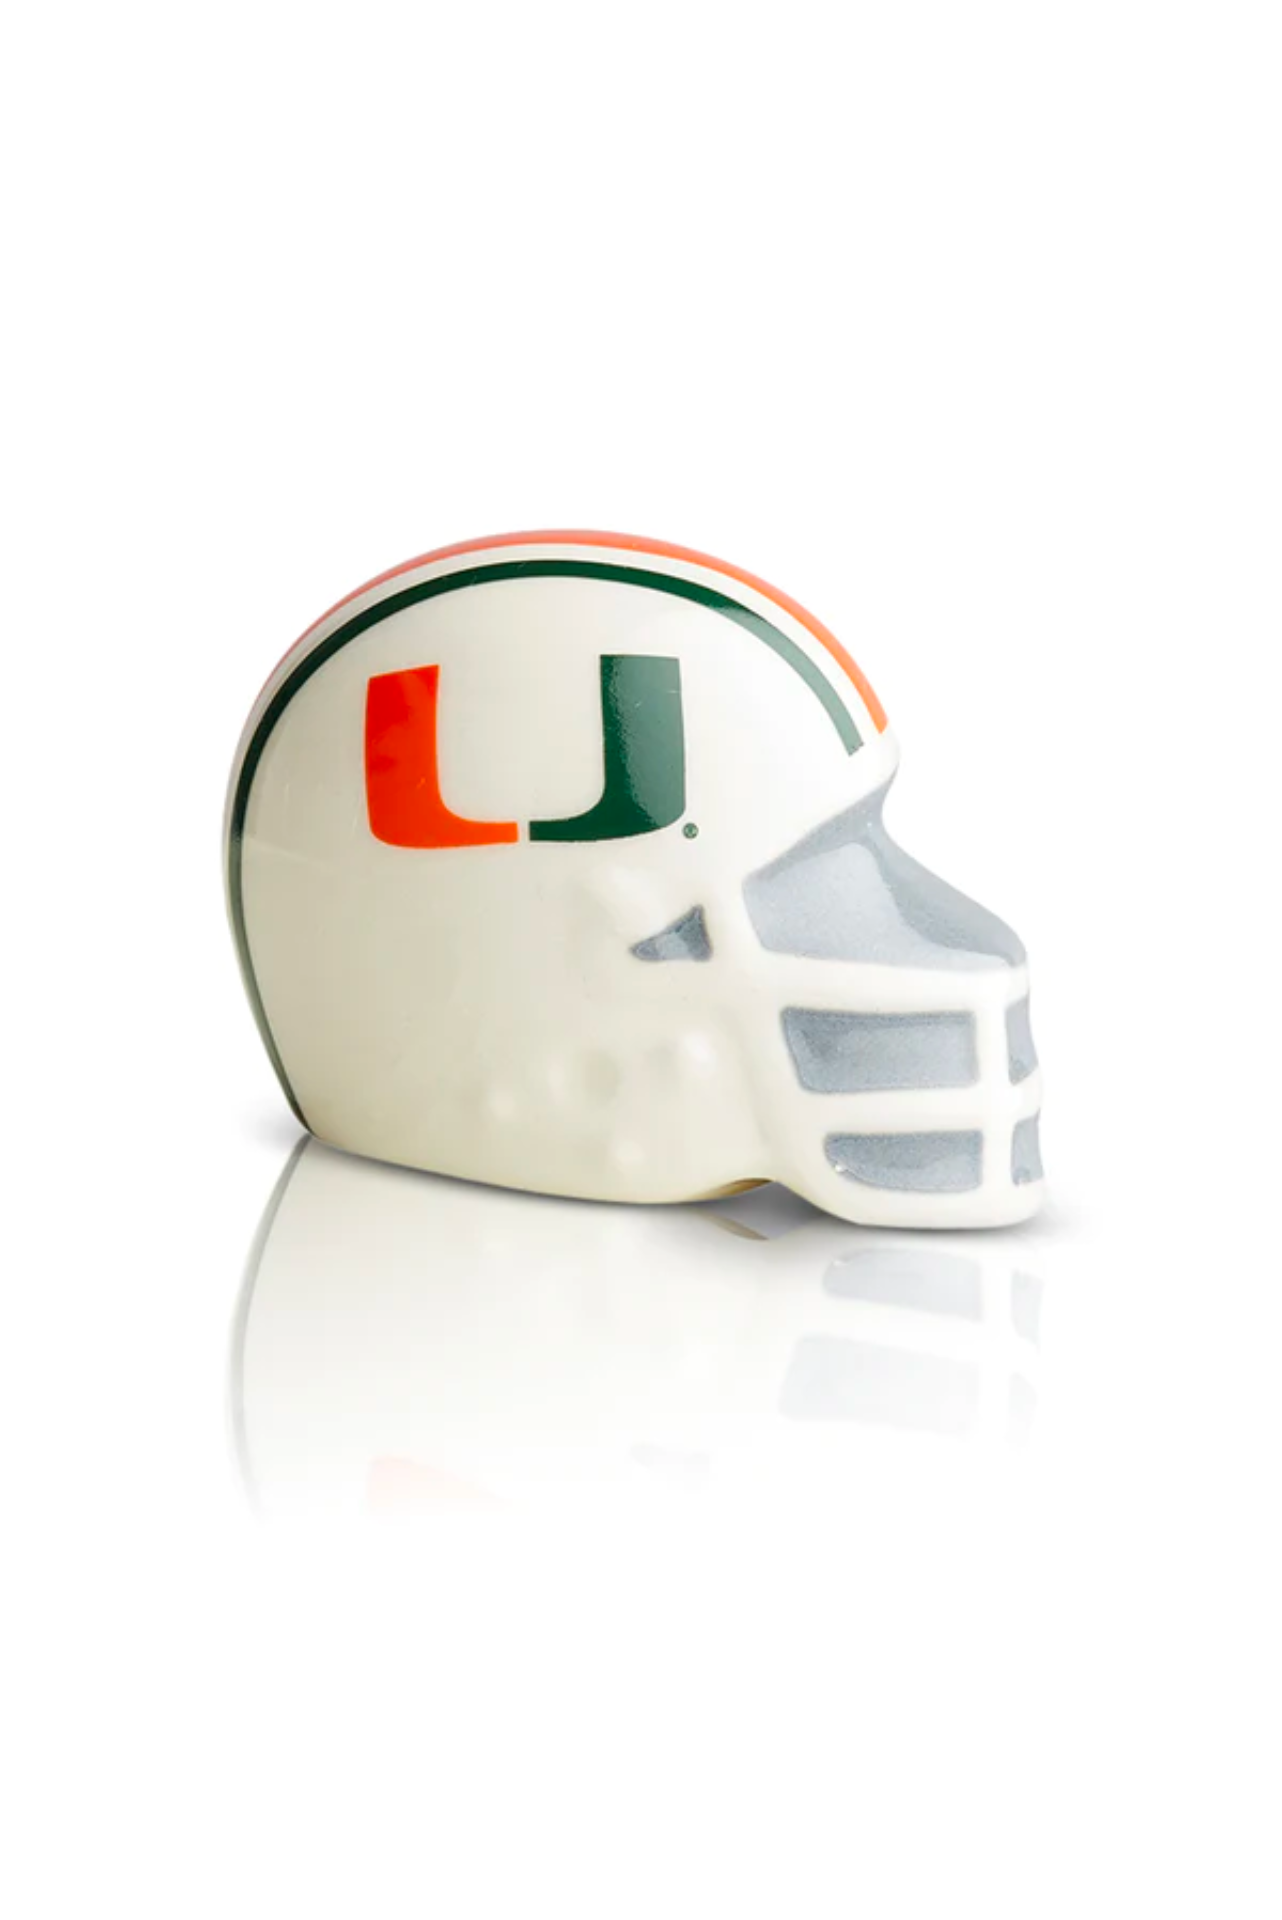 U Miami Helmet (A306)